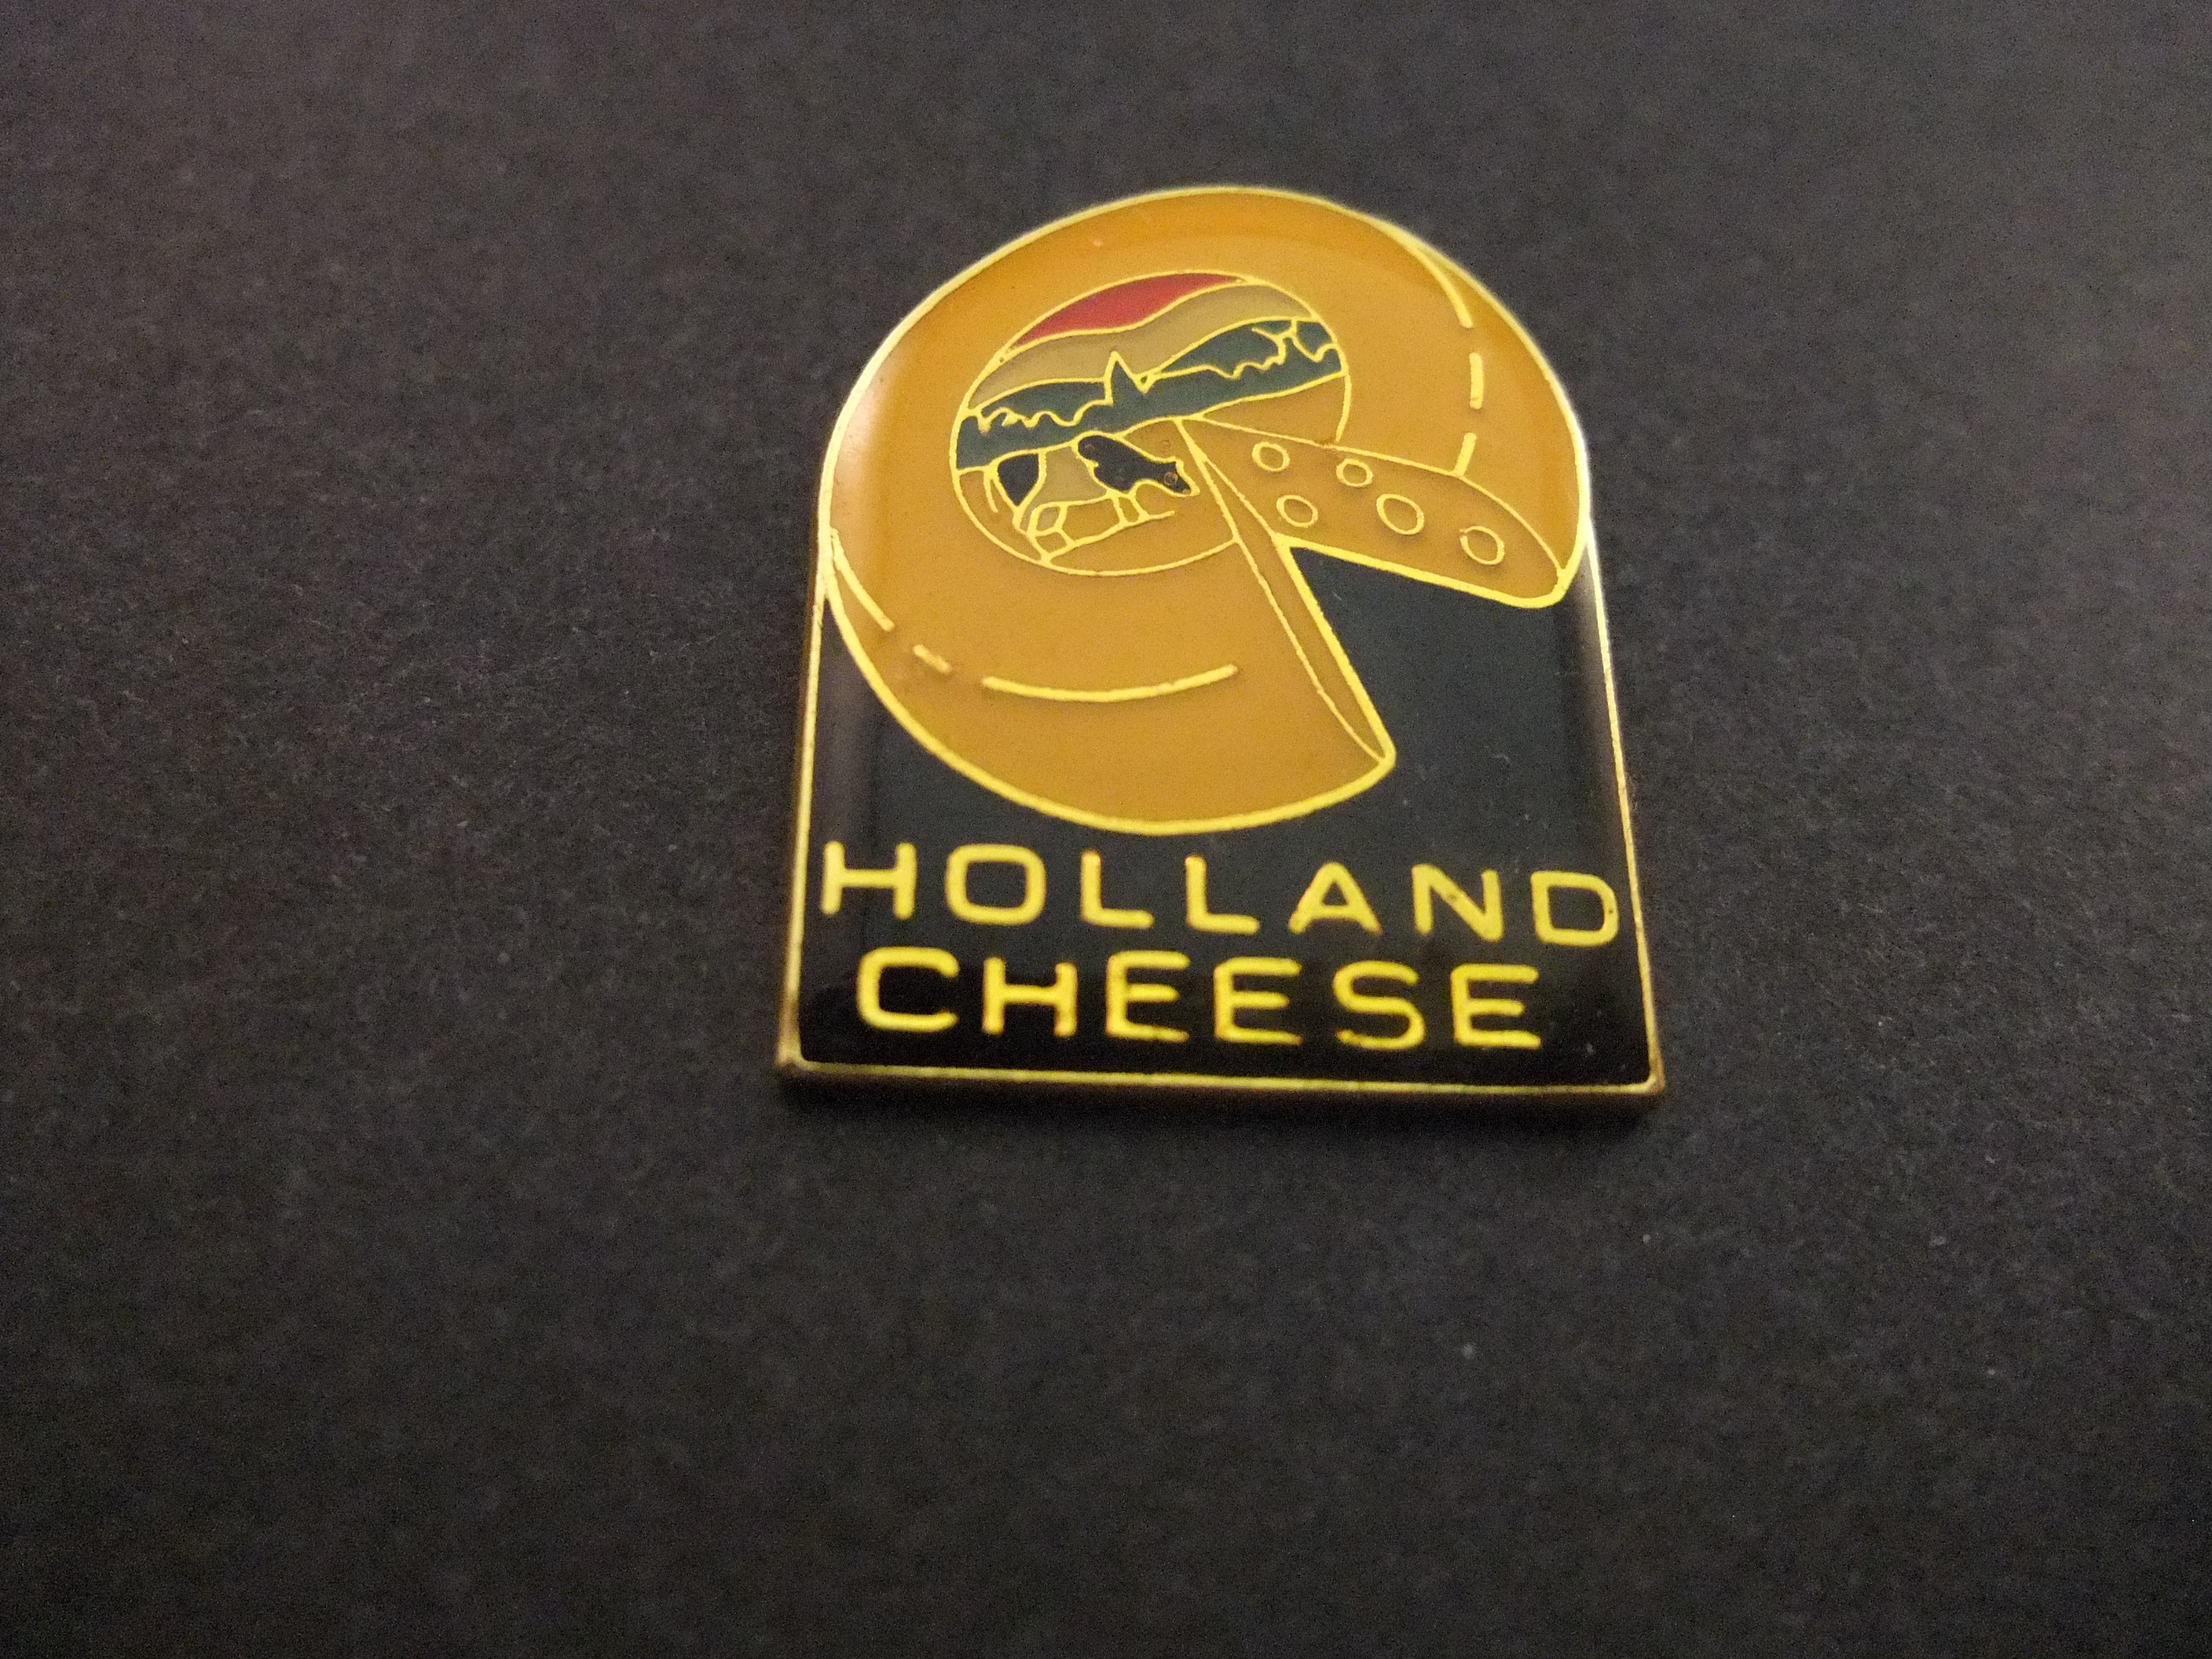 Souvenir Holland boerenkaas cheese , koe